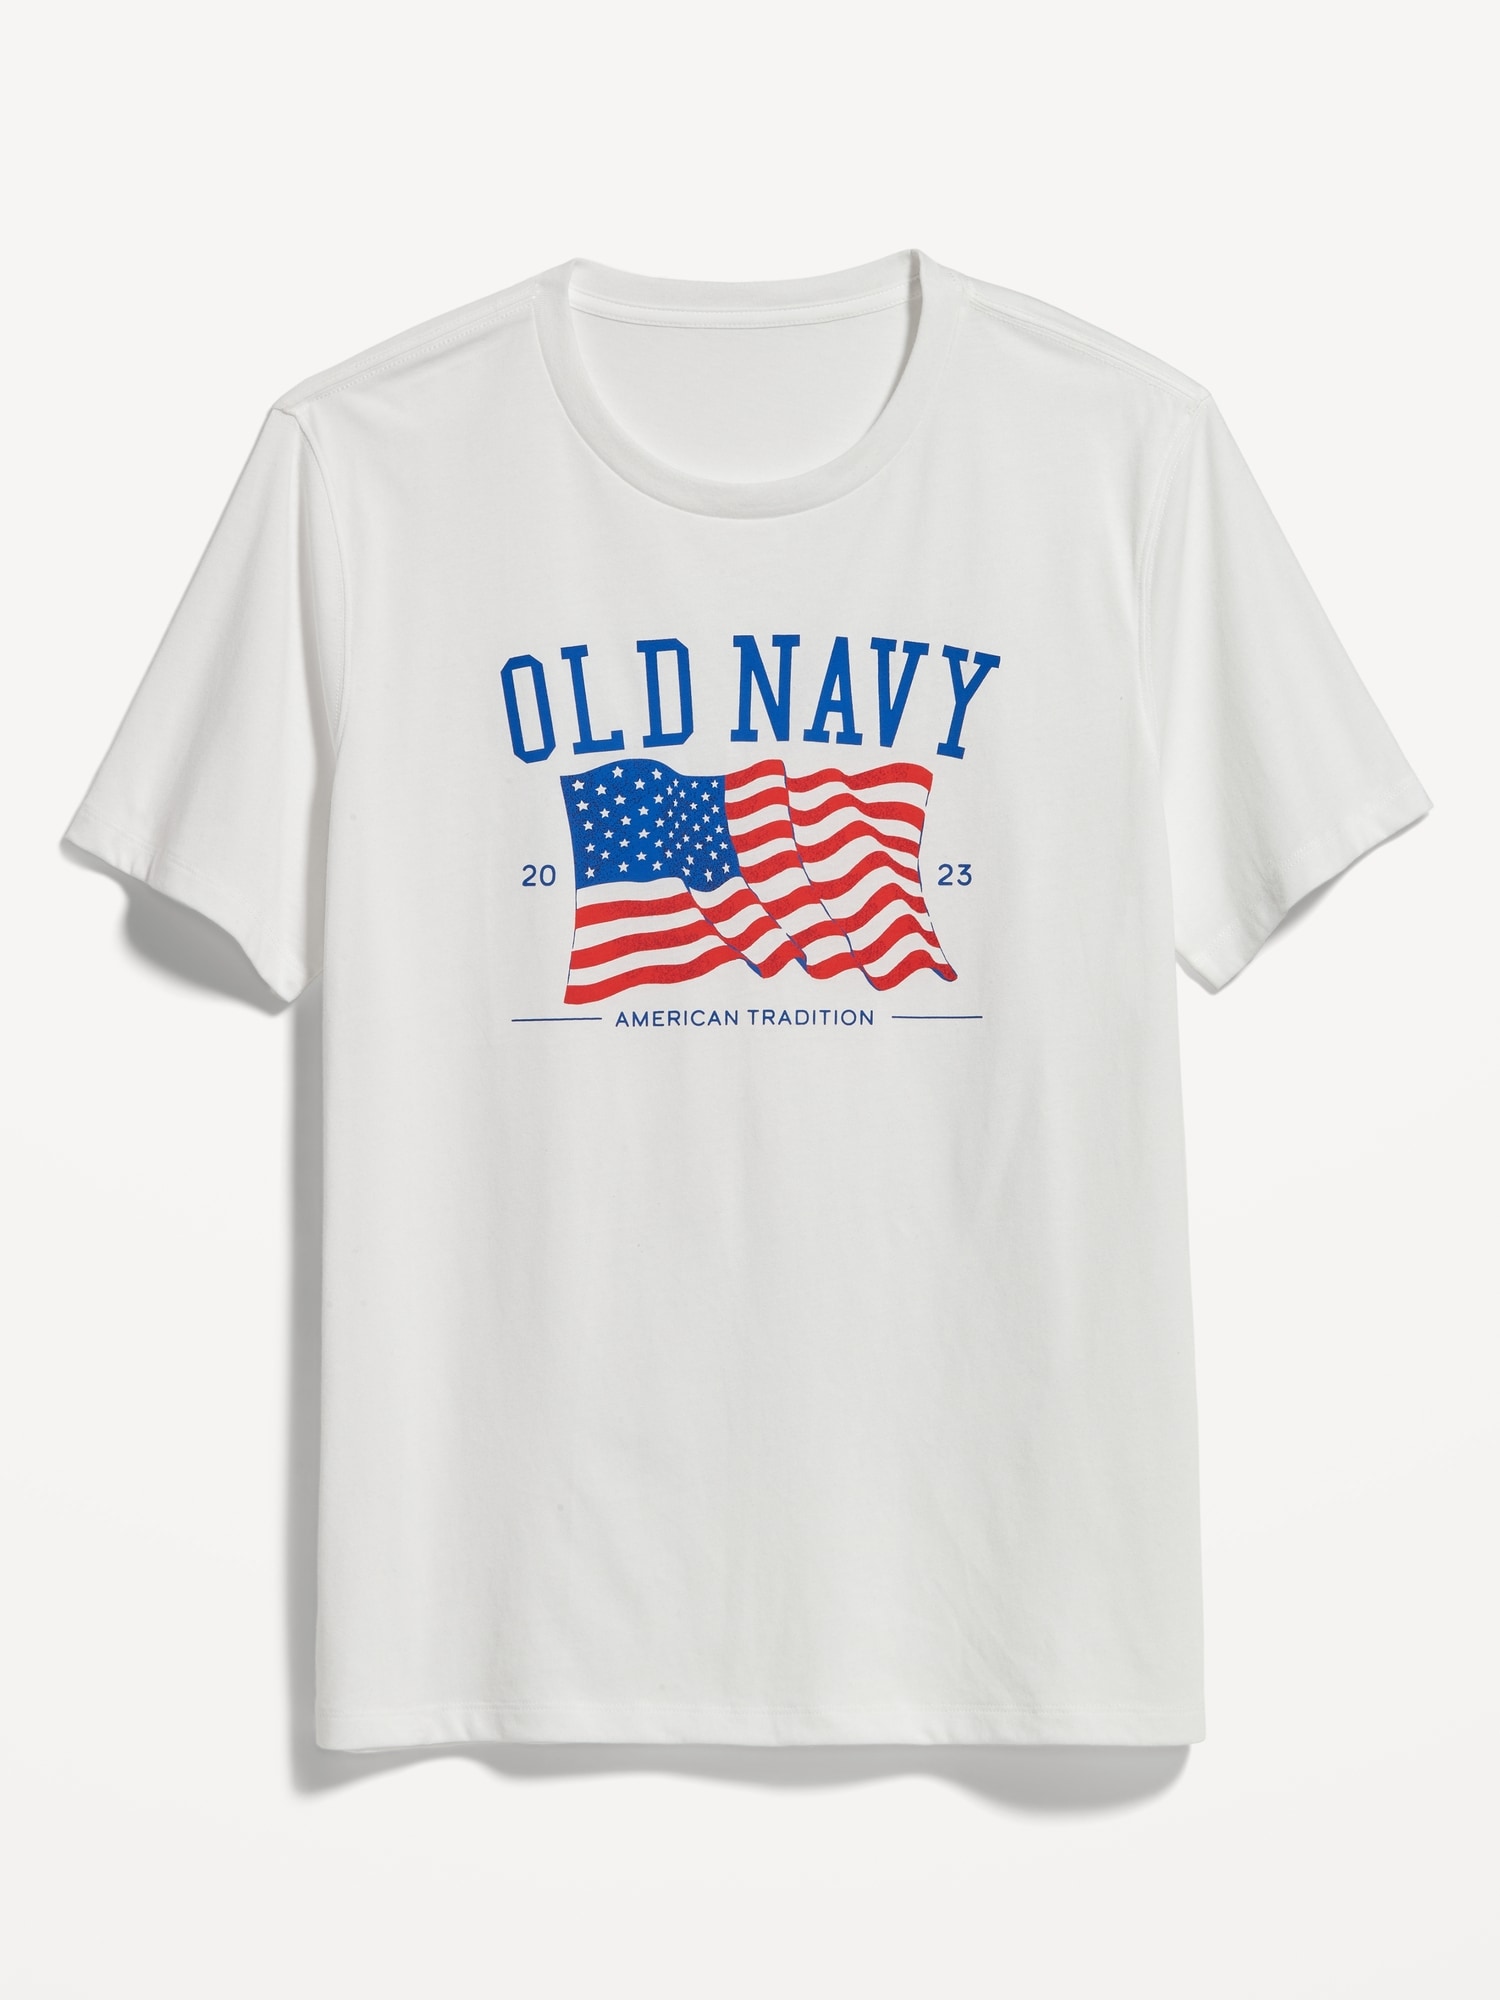 navy flag shirt